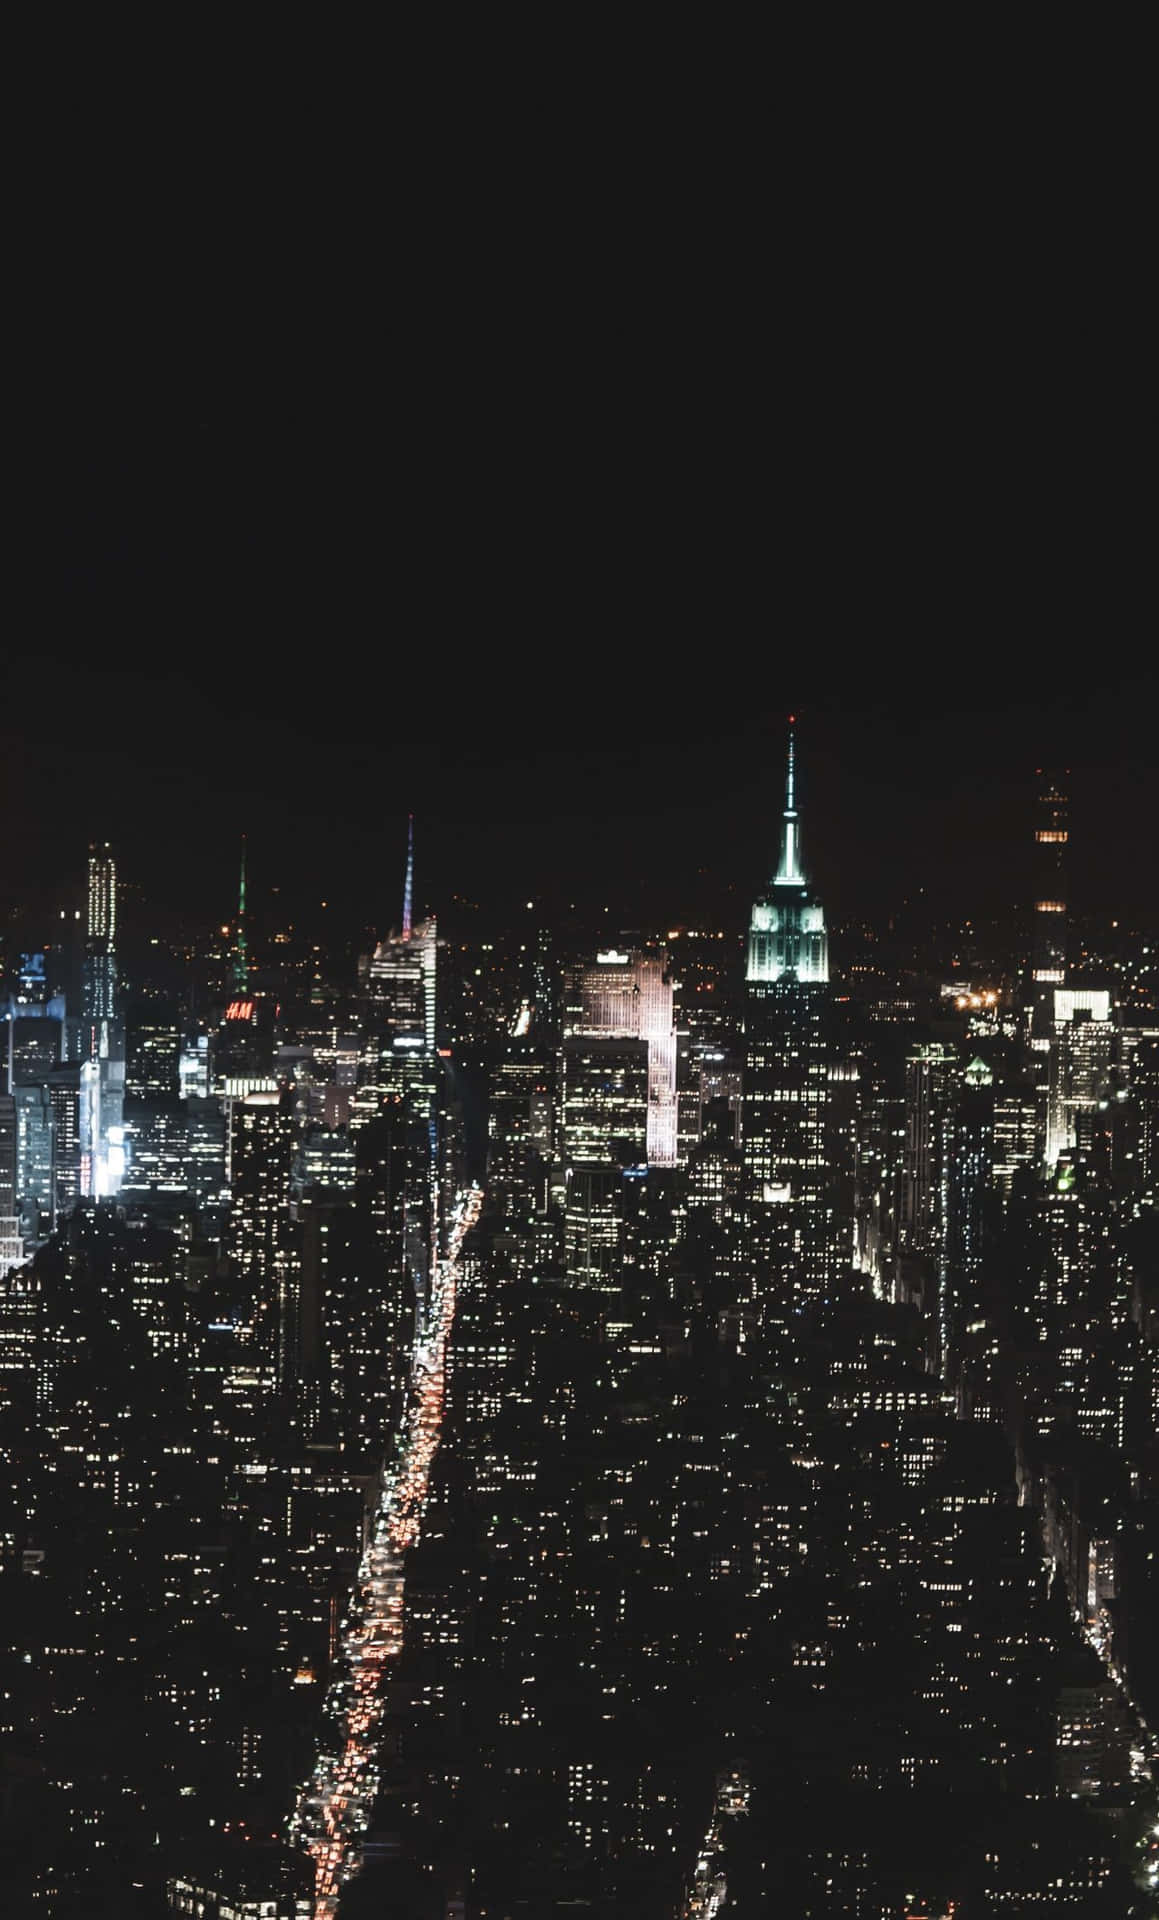 Newyork City Notte Oscurità Iphone Sfondo